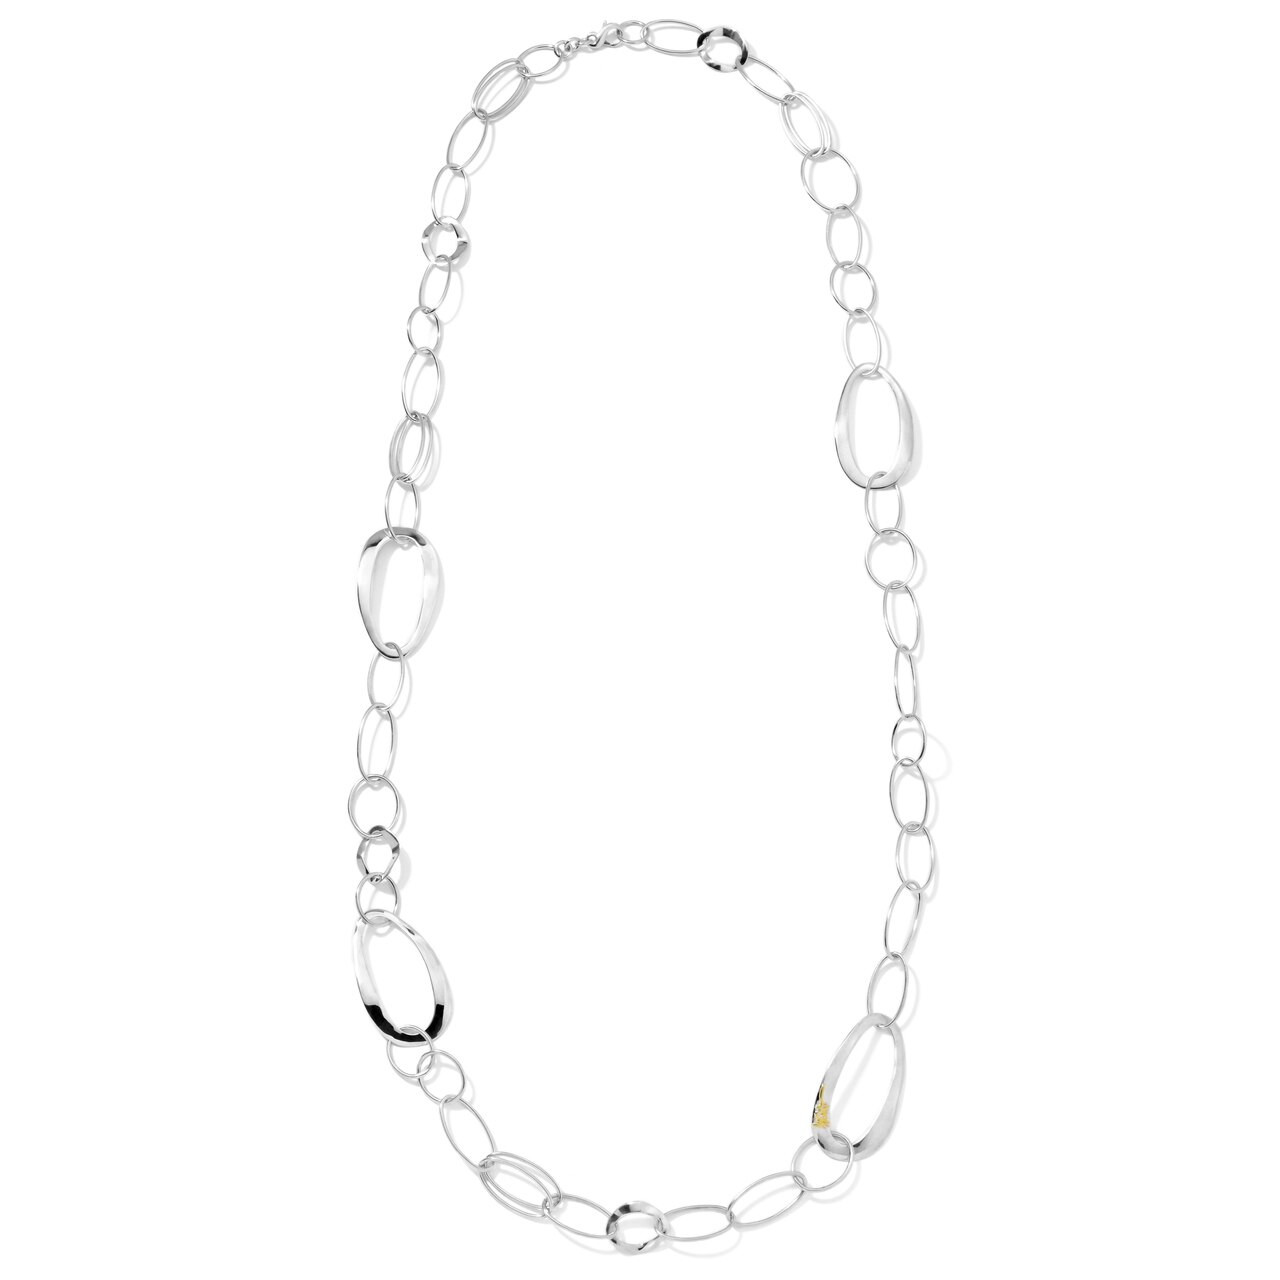 IPPOLITA Classico Chain Necklace in Sterling Silver